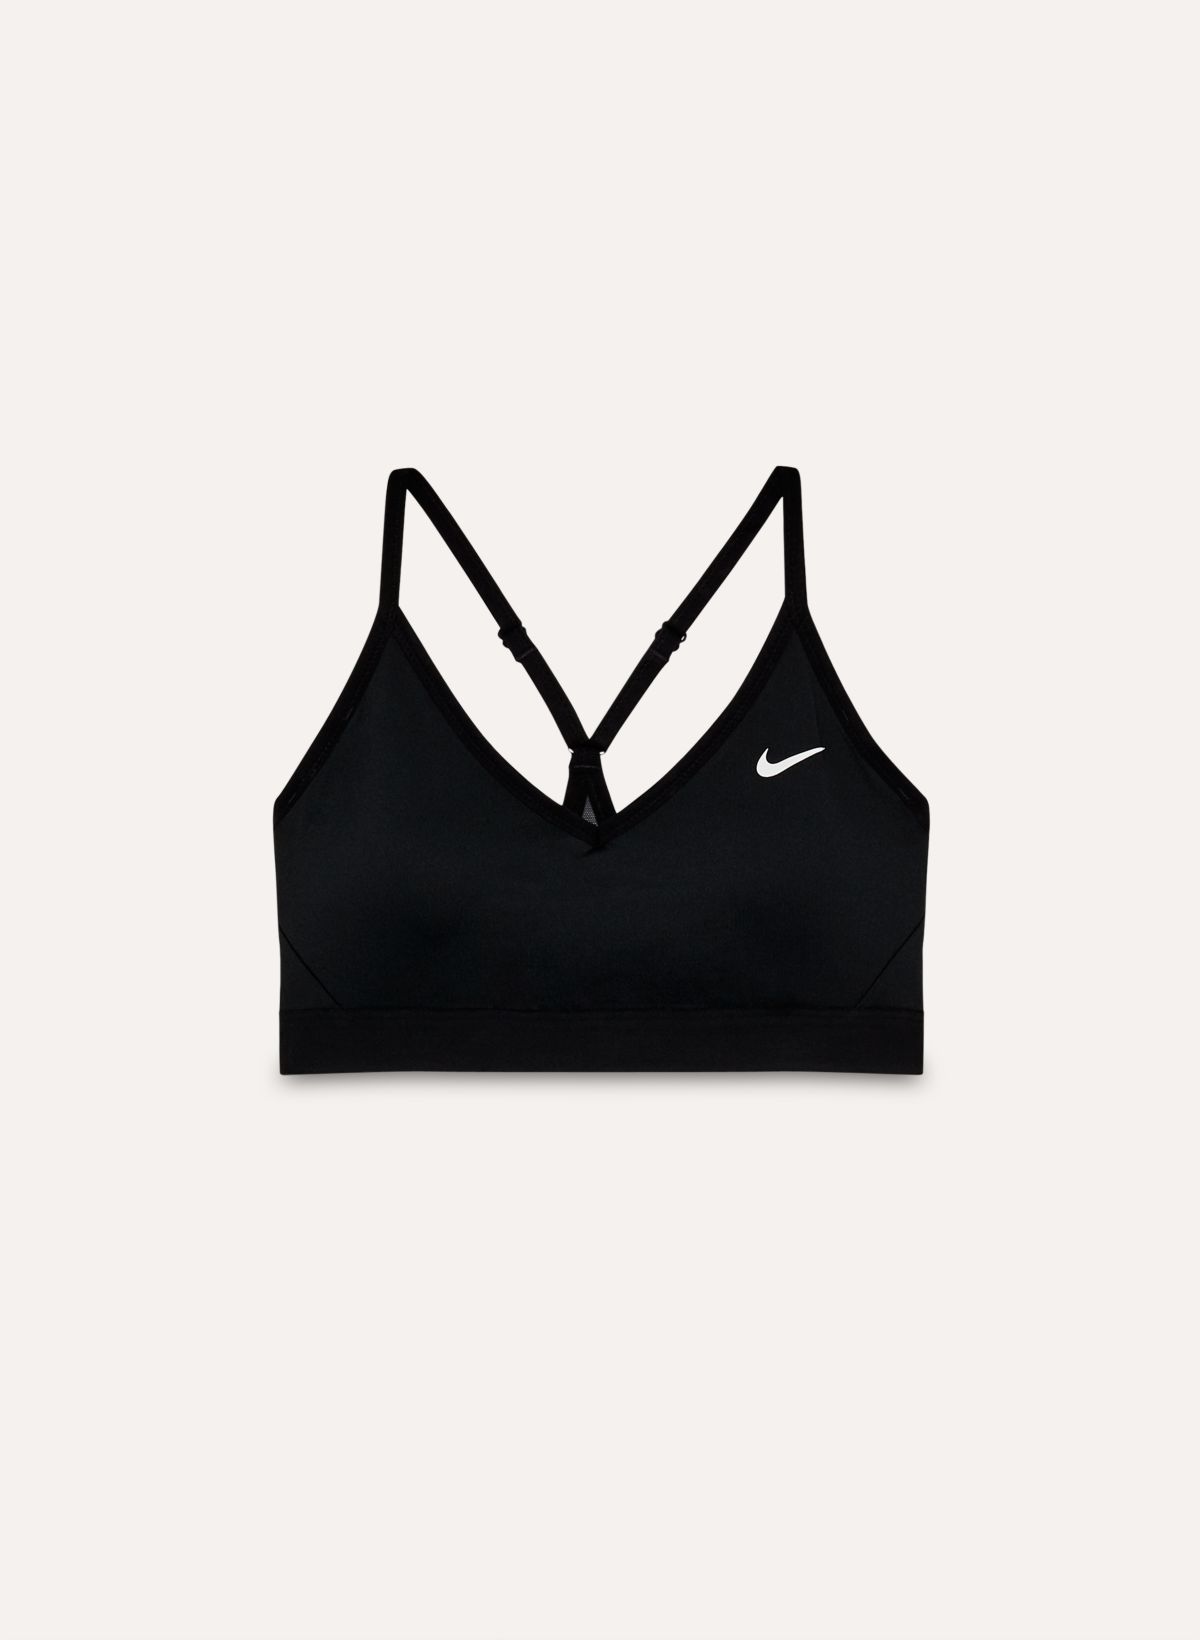 Nike Indy Women's Bra Black/grey/white